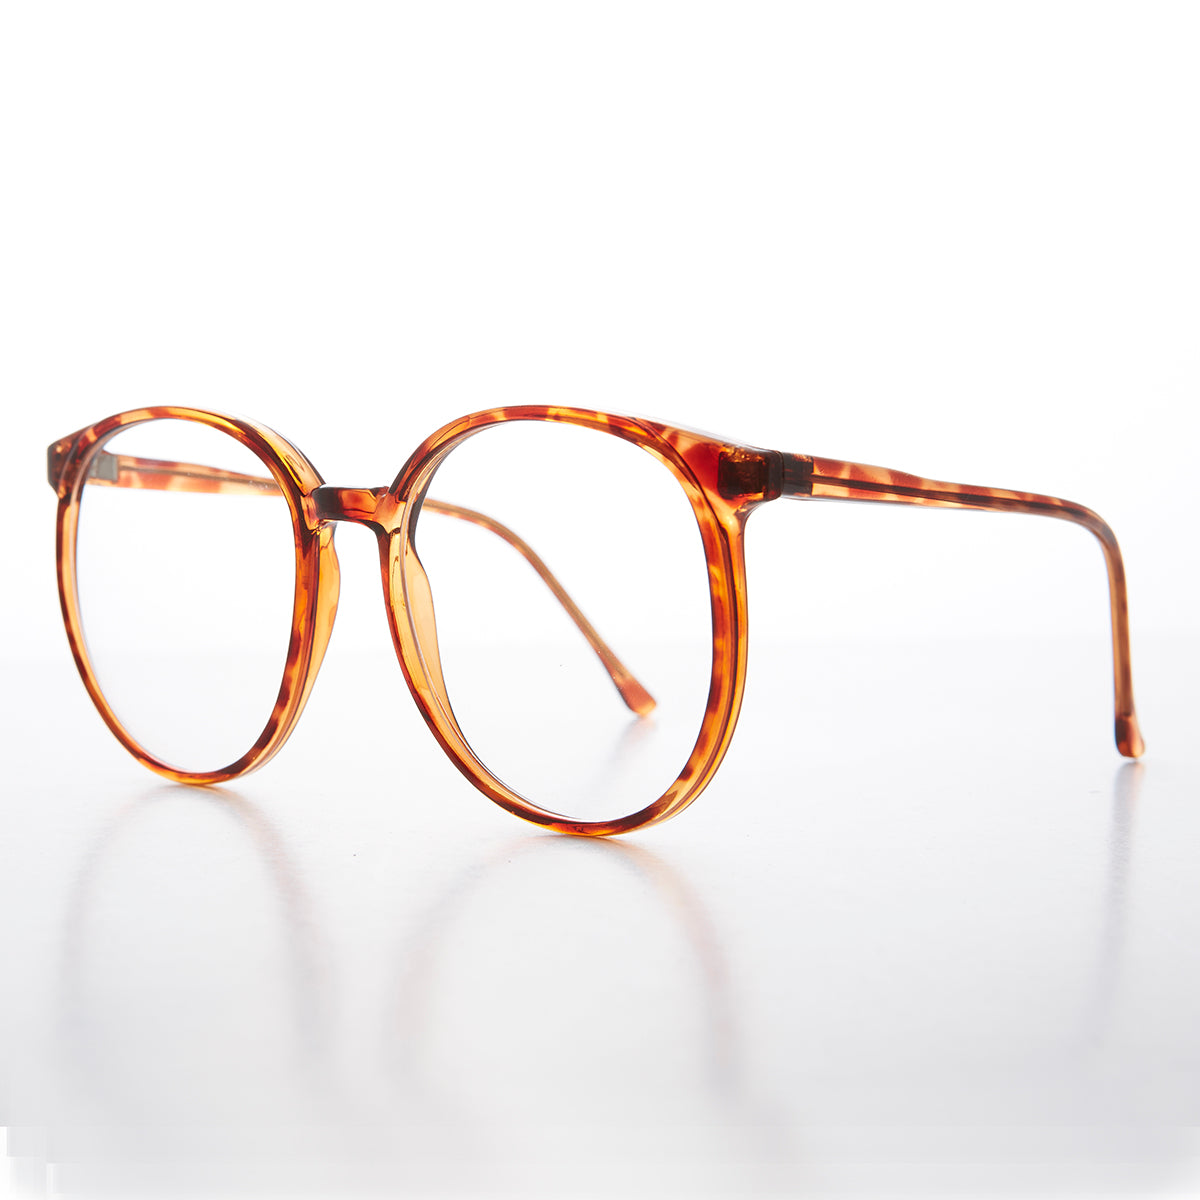 Big 80s Secretary Eyeglasses with Clear Lens